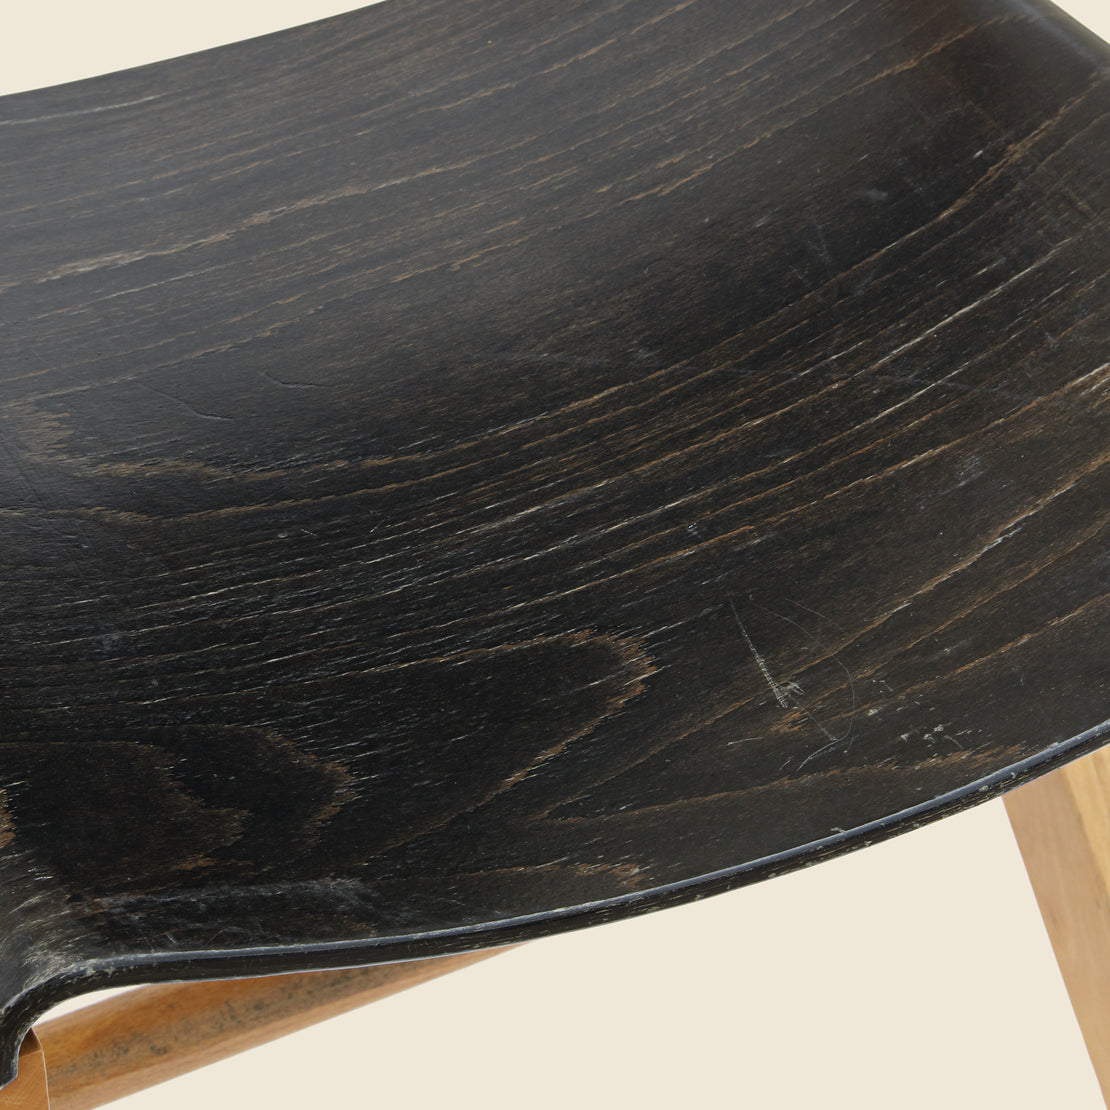 English Industrial Plywood Chair - Black